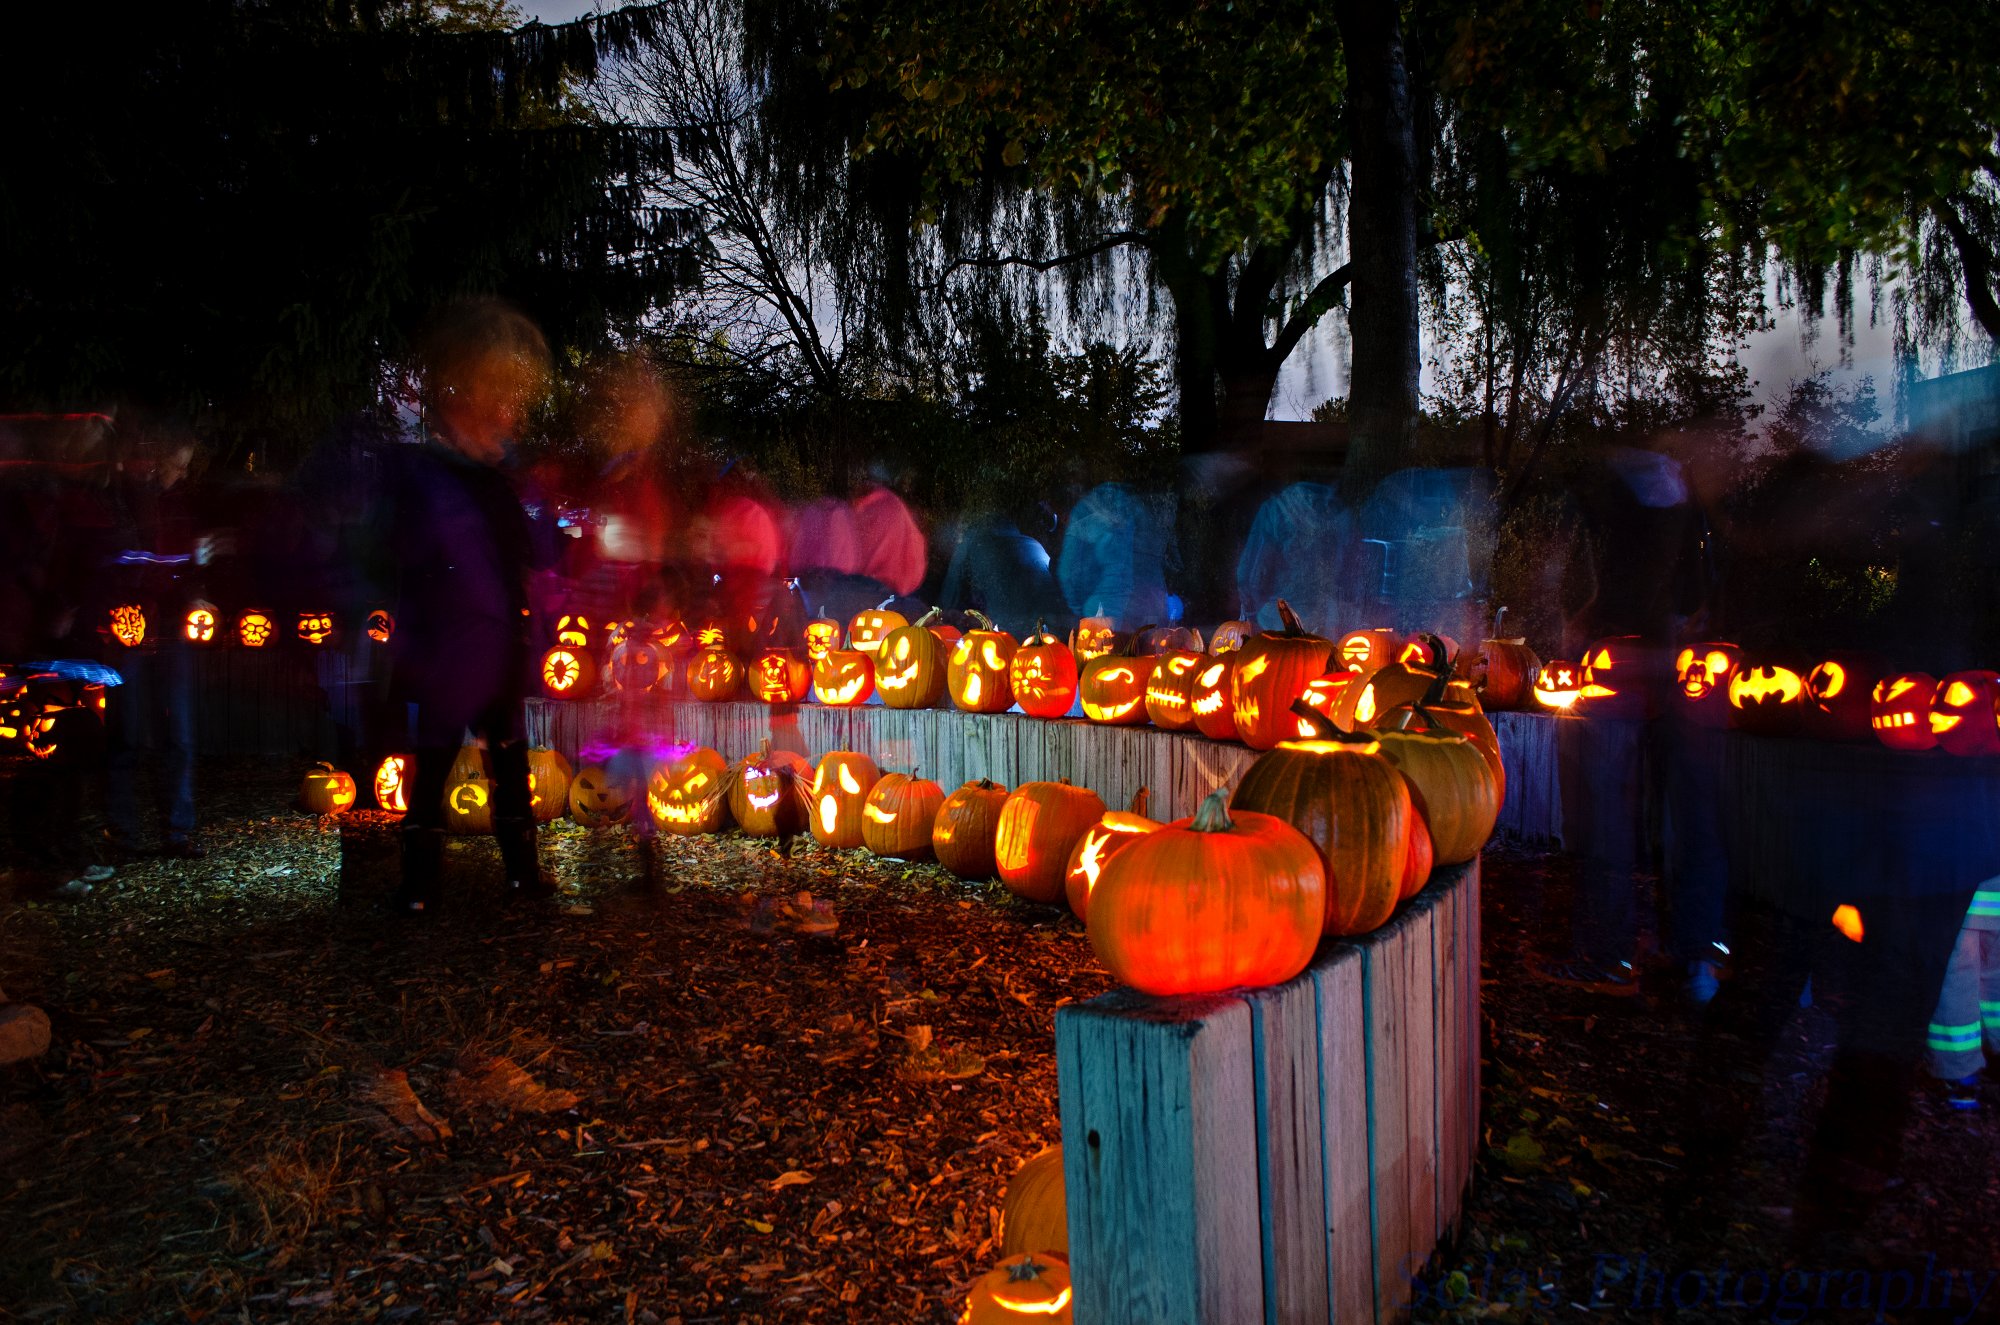 SHORA pumpkin parade 2015 Google image from http://www.shora.ca/wp-content/uploads/2015/05/DSC_0400.jpg